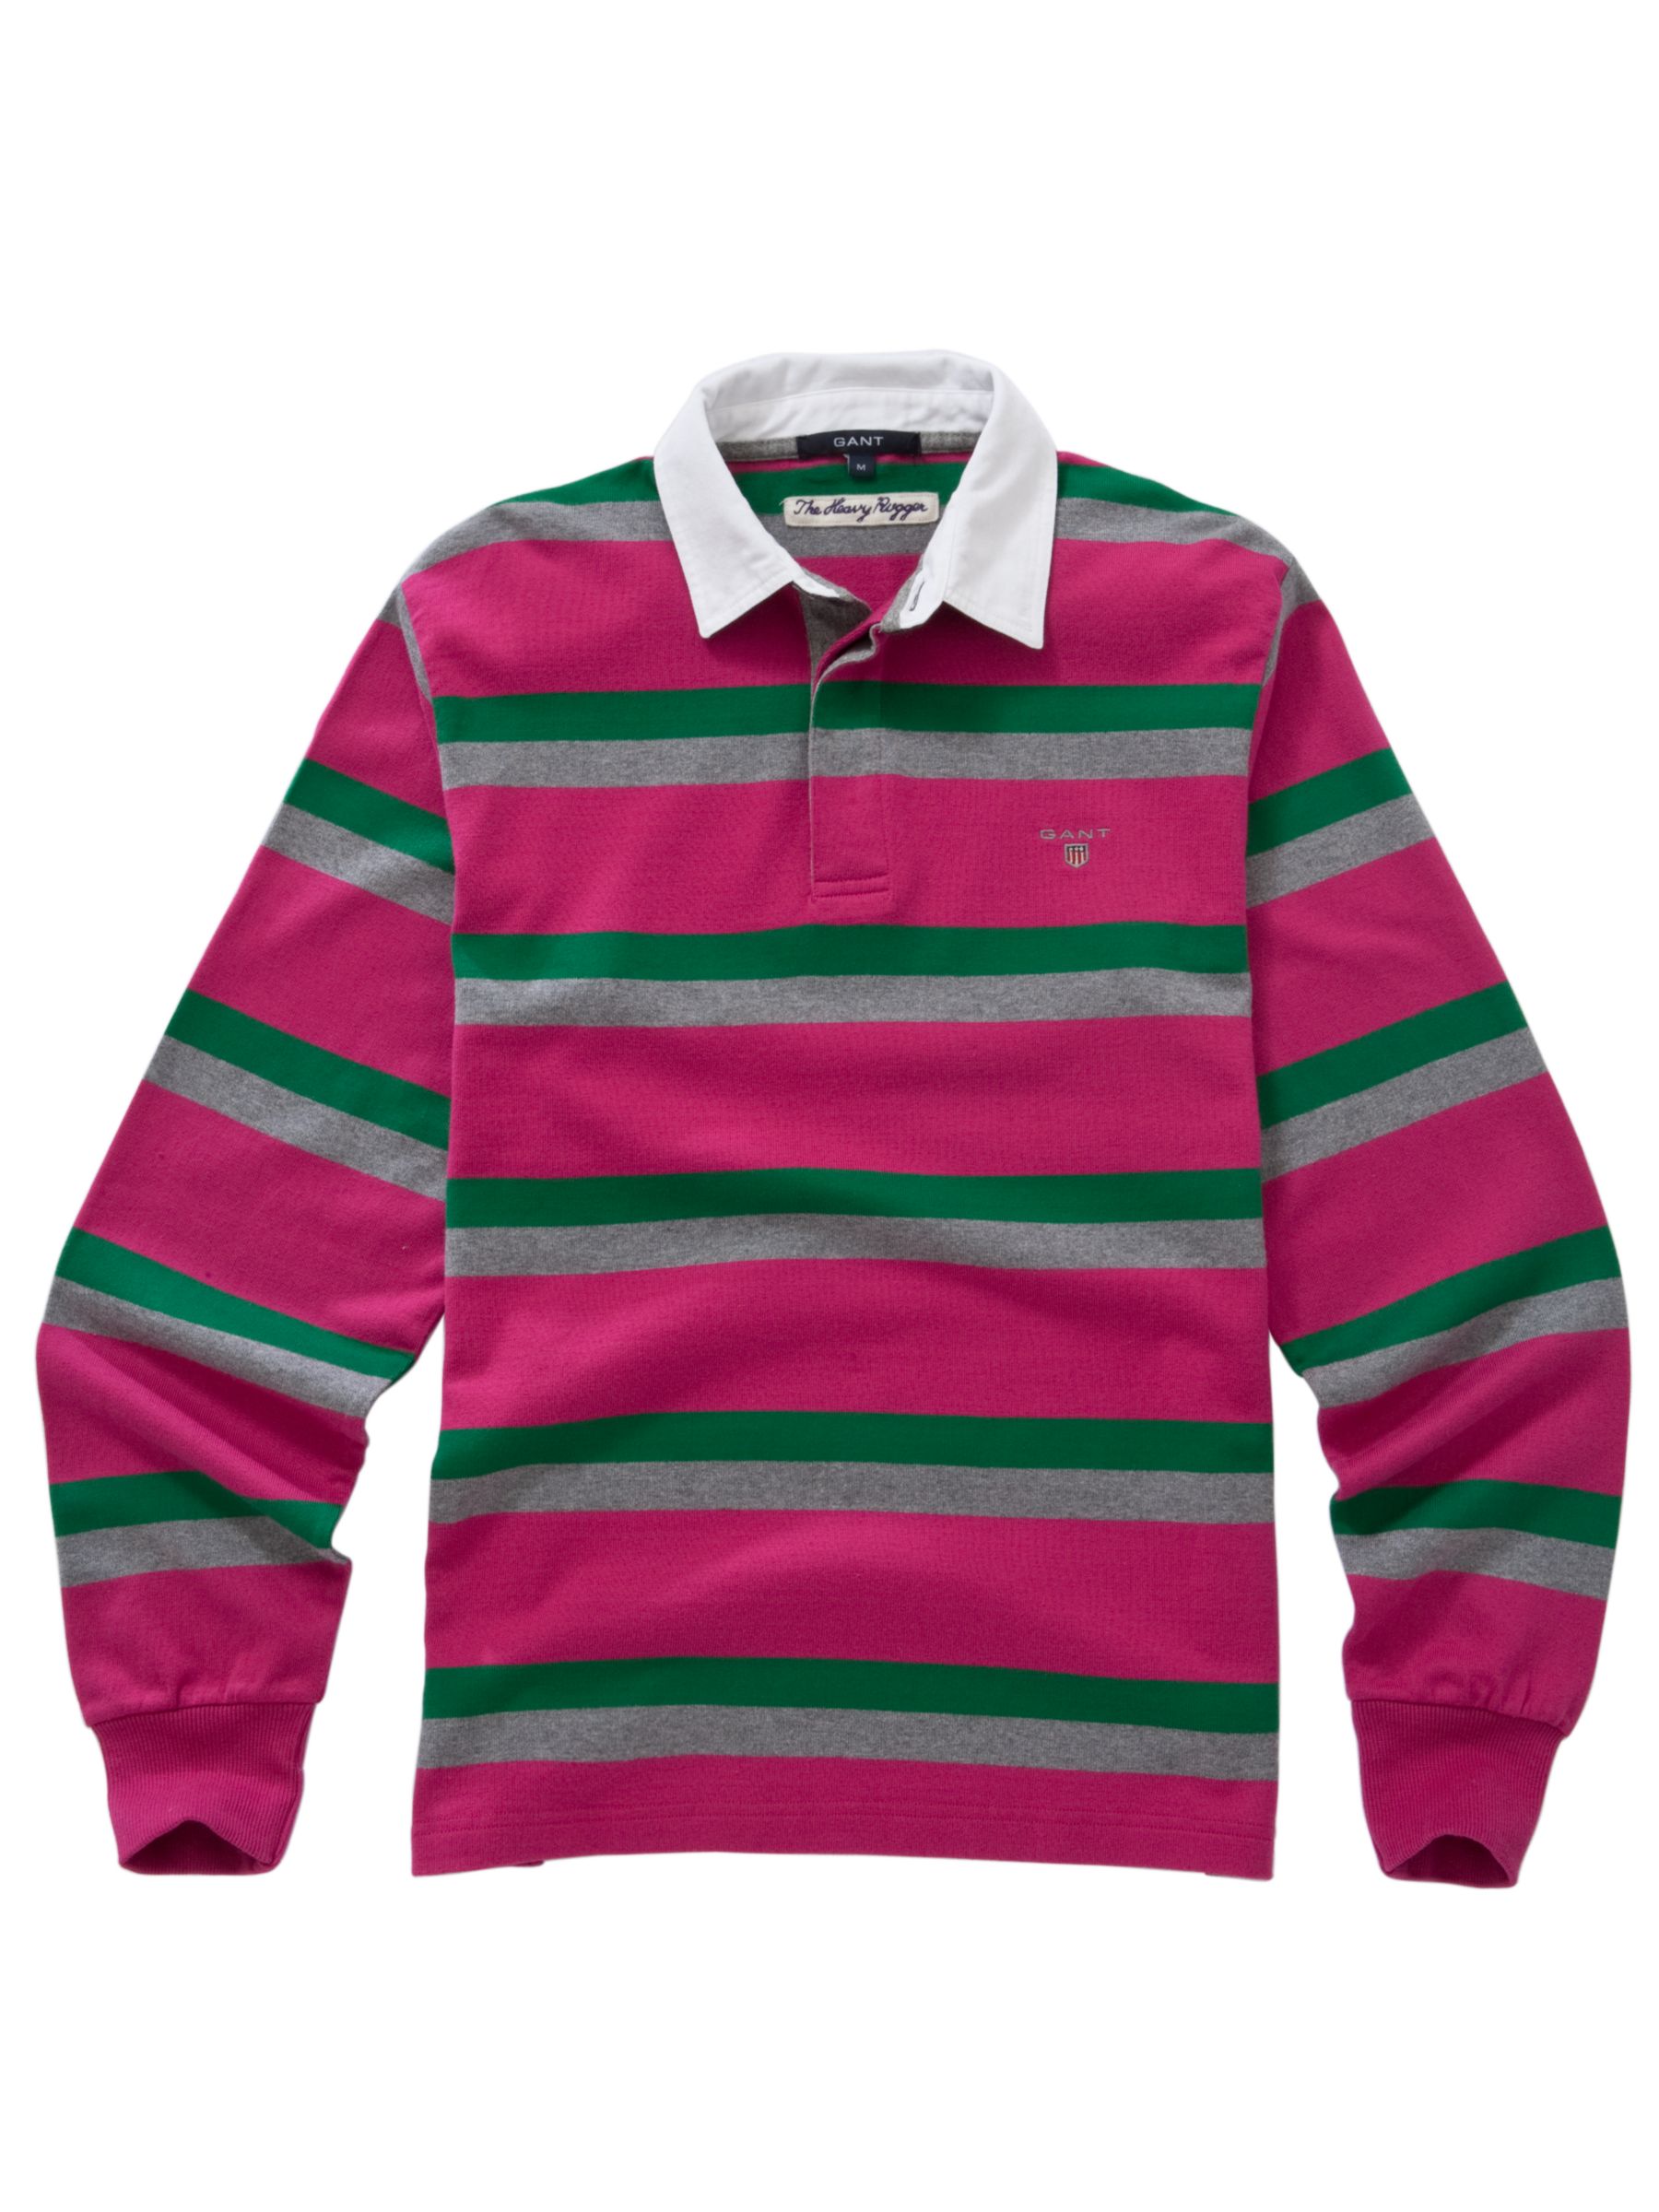 Gant Georgetown Dual Stripe Rugby Shirt, Fuchsia